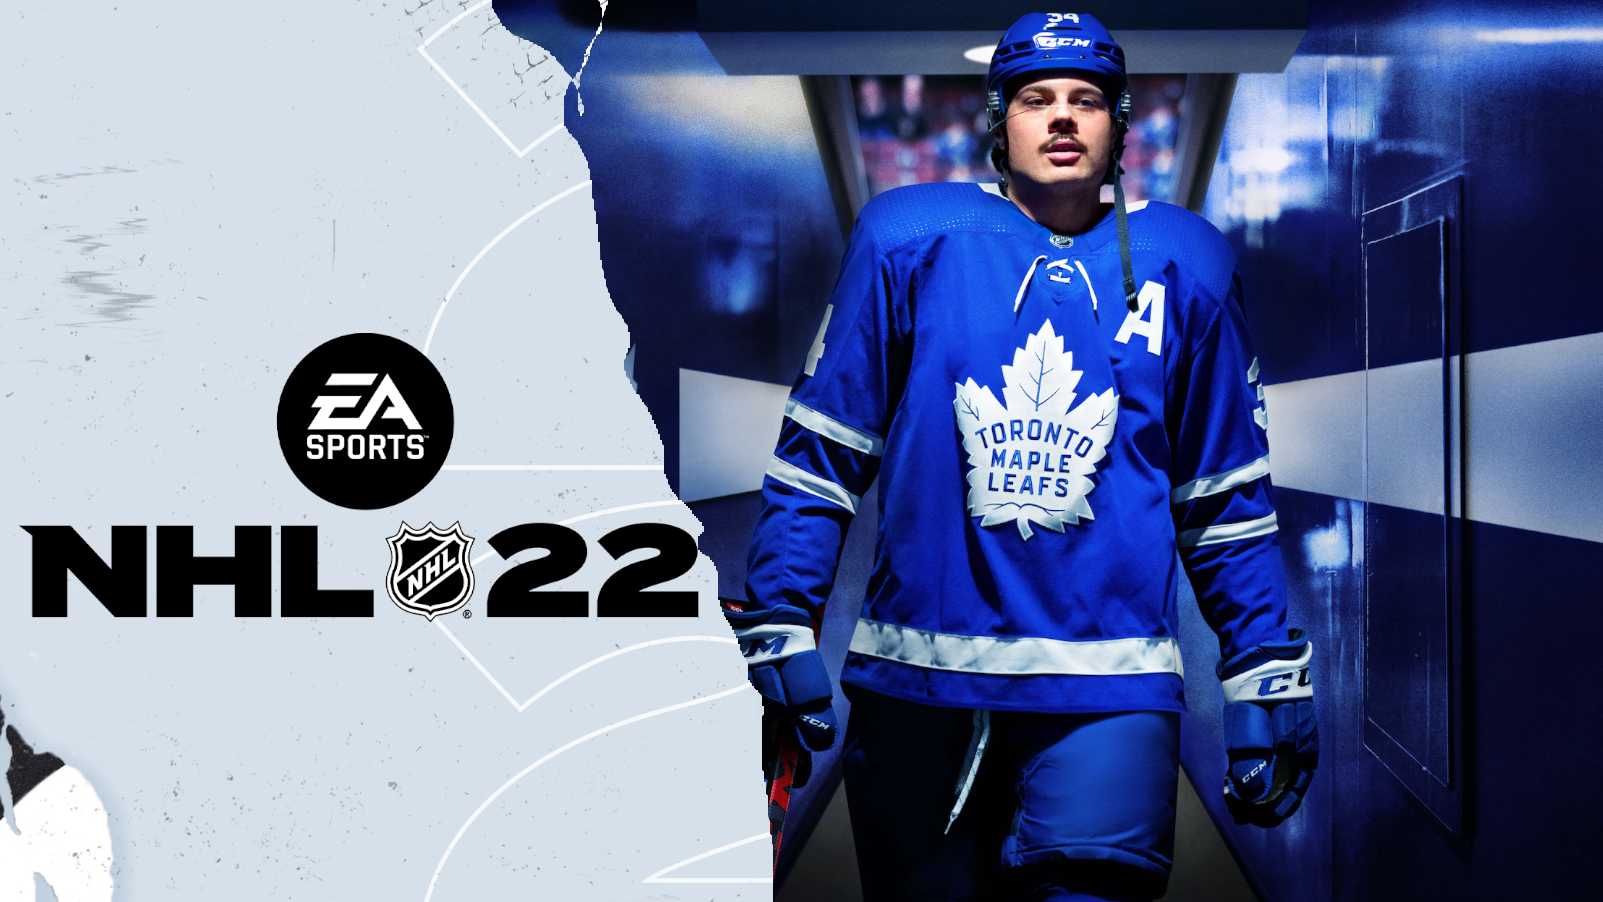 НХЛ 22 EA Sports. НХЛ на Нинтендо свитч. NHL 22 Nintendo Switch. Виртуальный хоккей.